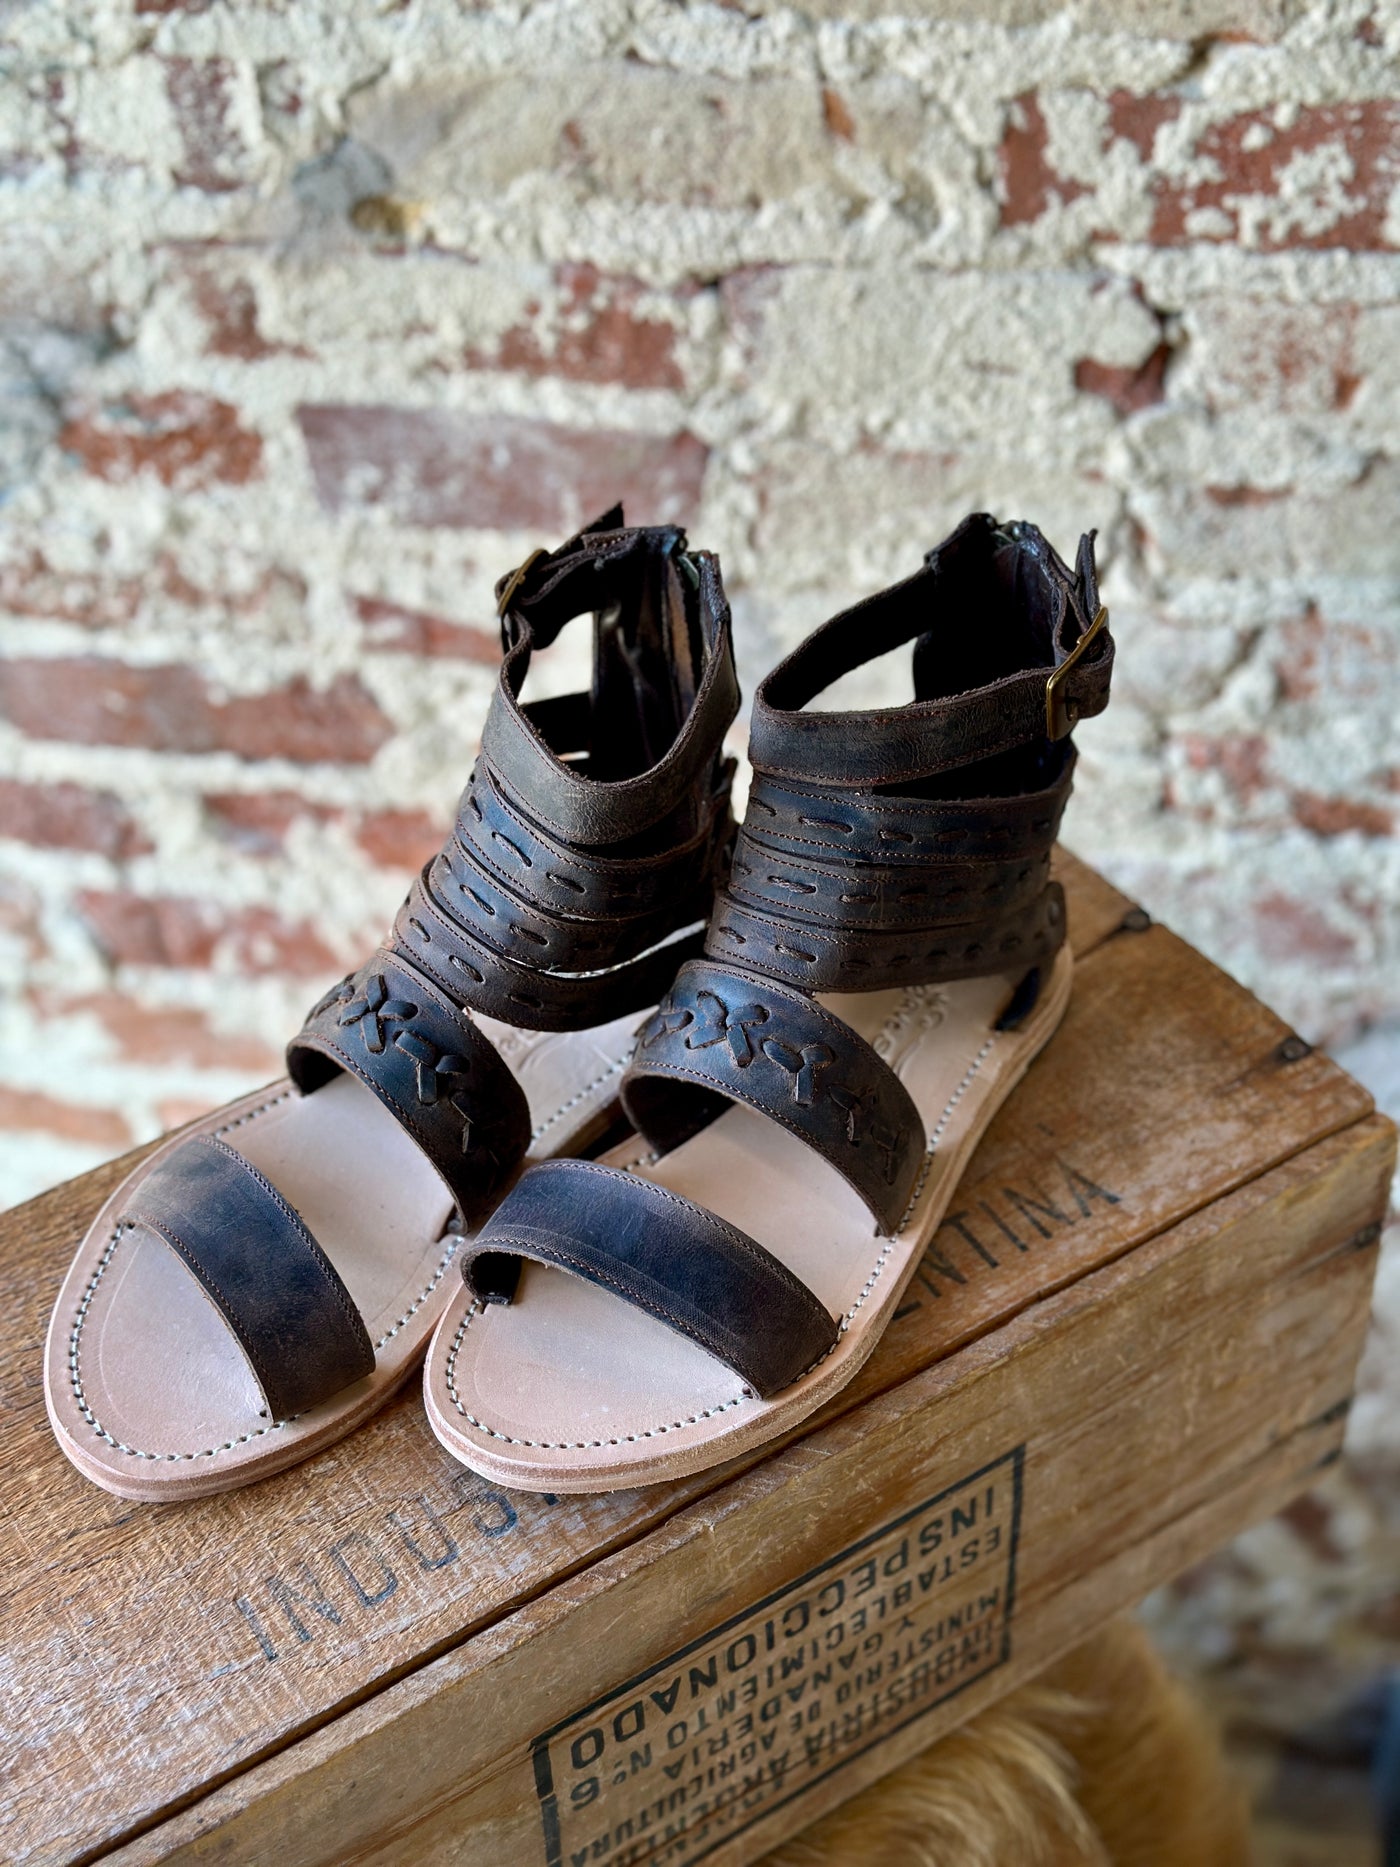 Horizon Lines Gladiator Sandals